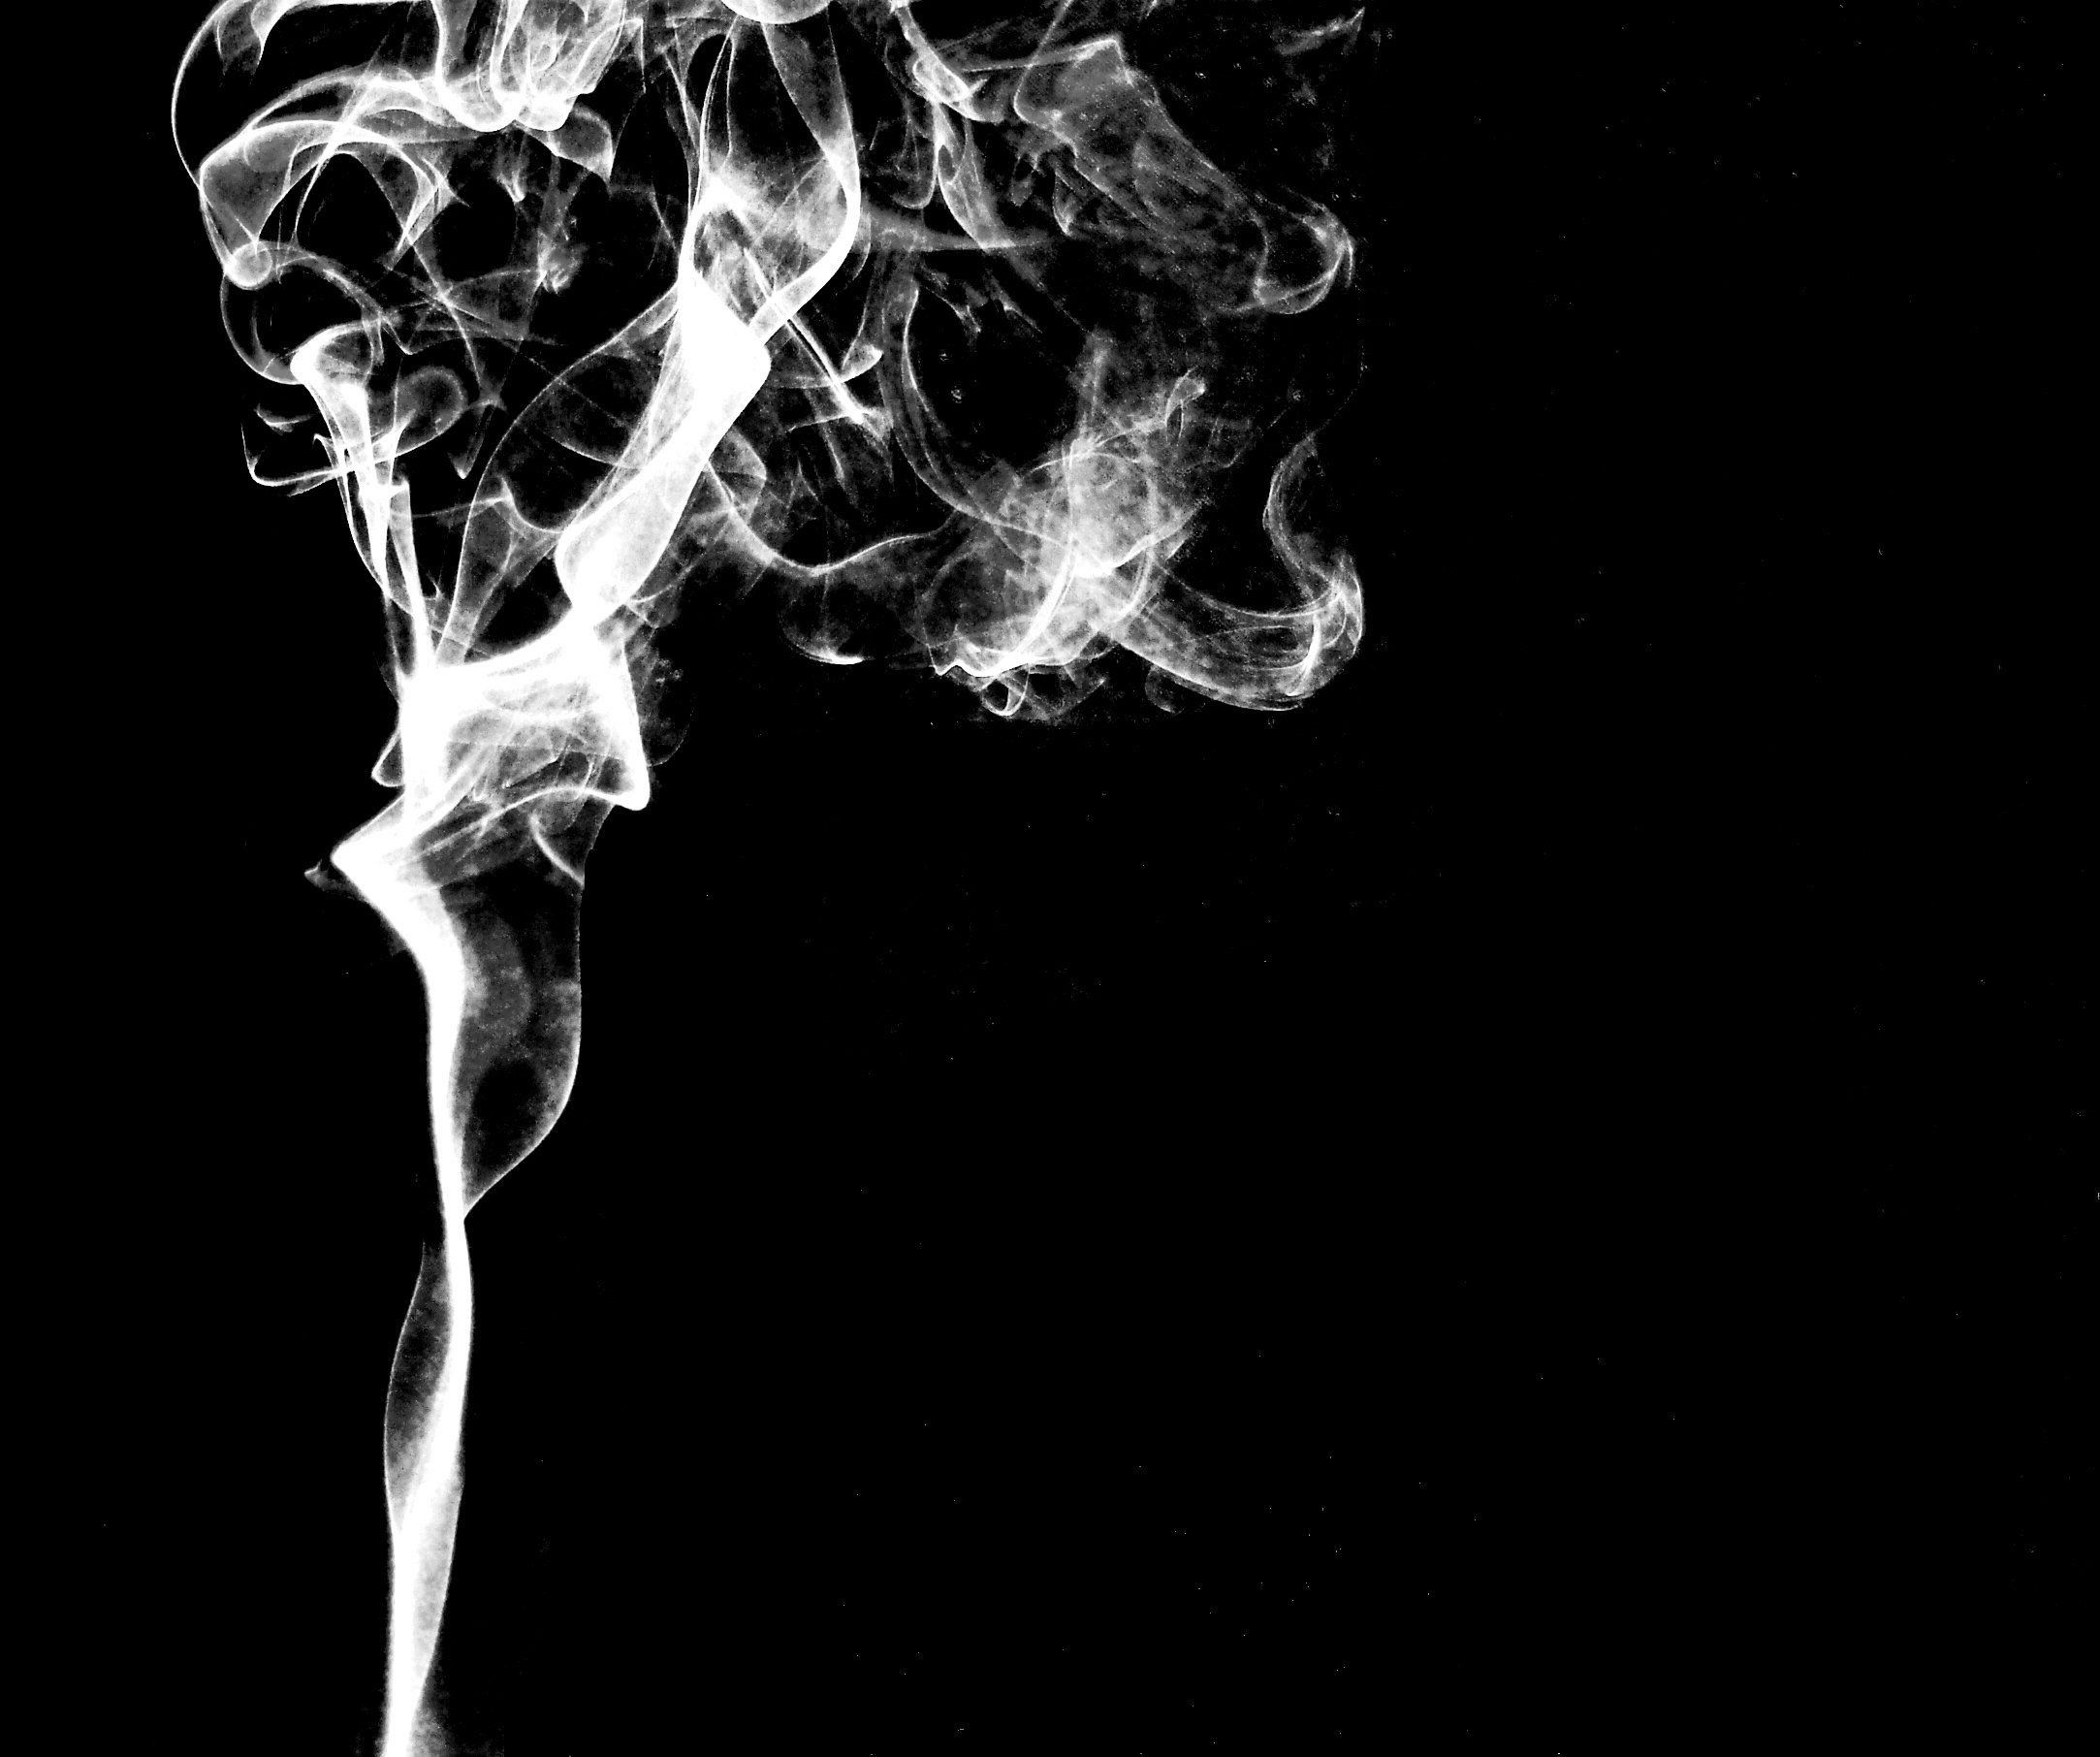 A photograph of smoke rising from a cigarette - Smoke